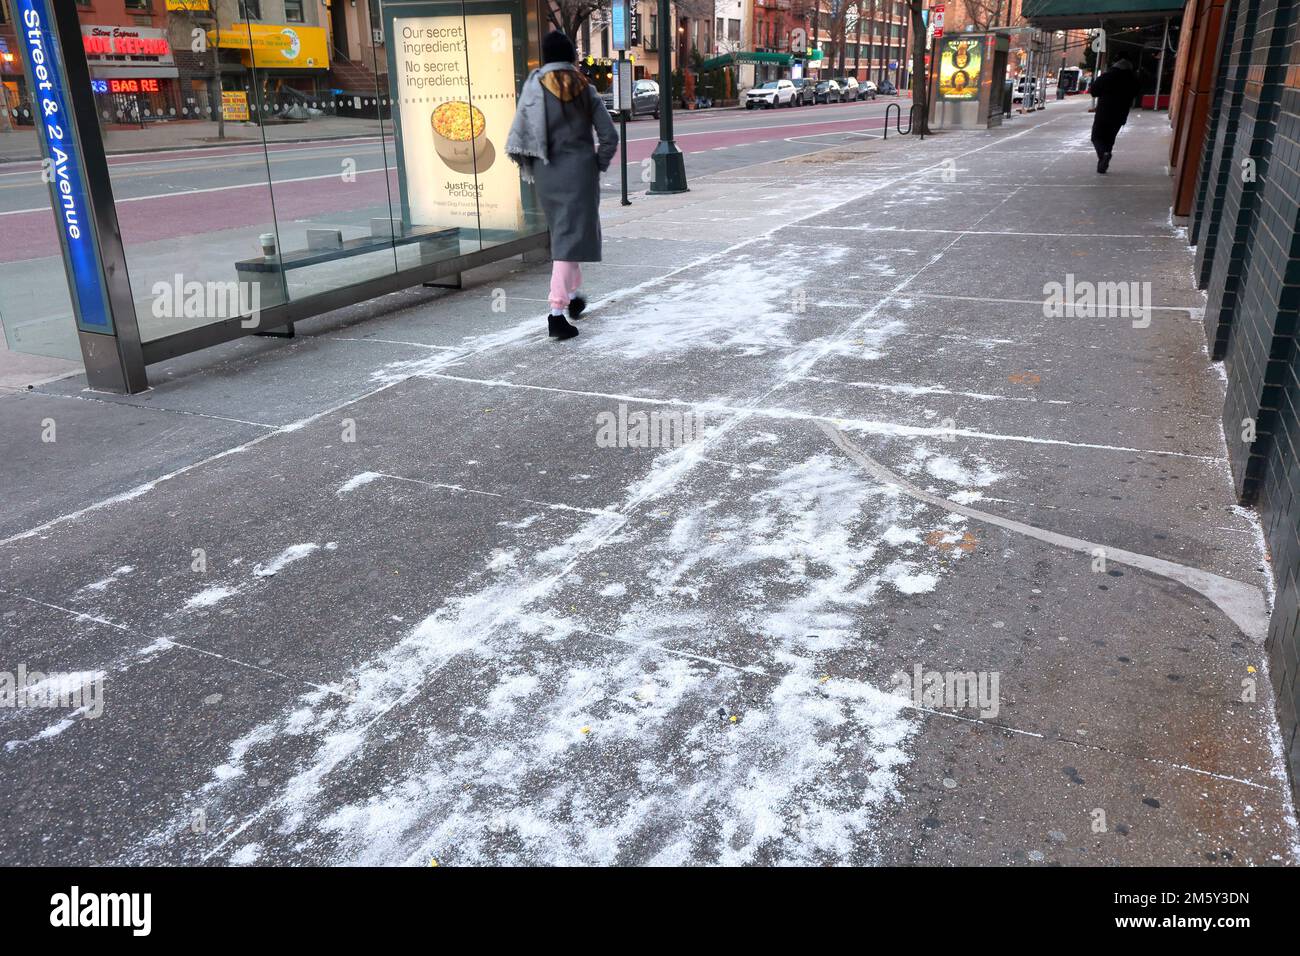 Deicing salt on a sidewalk in New York City. rock salt on a sidewalk in anticipation of icy winter weather. Stock Photo